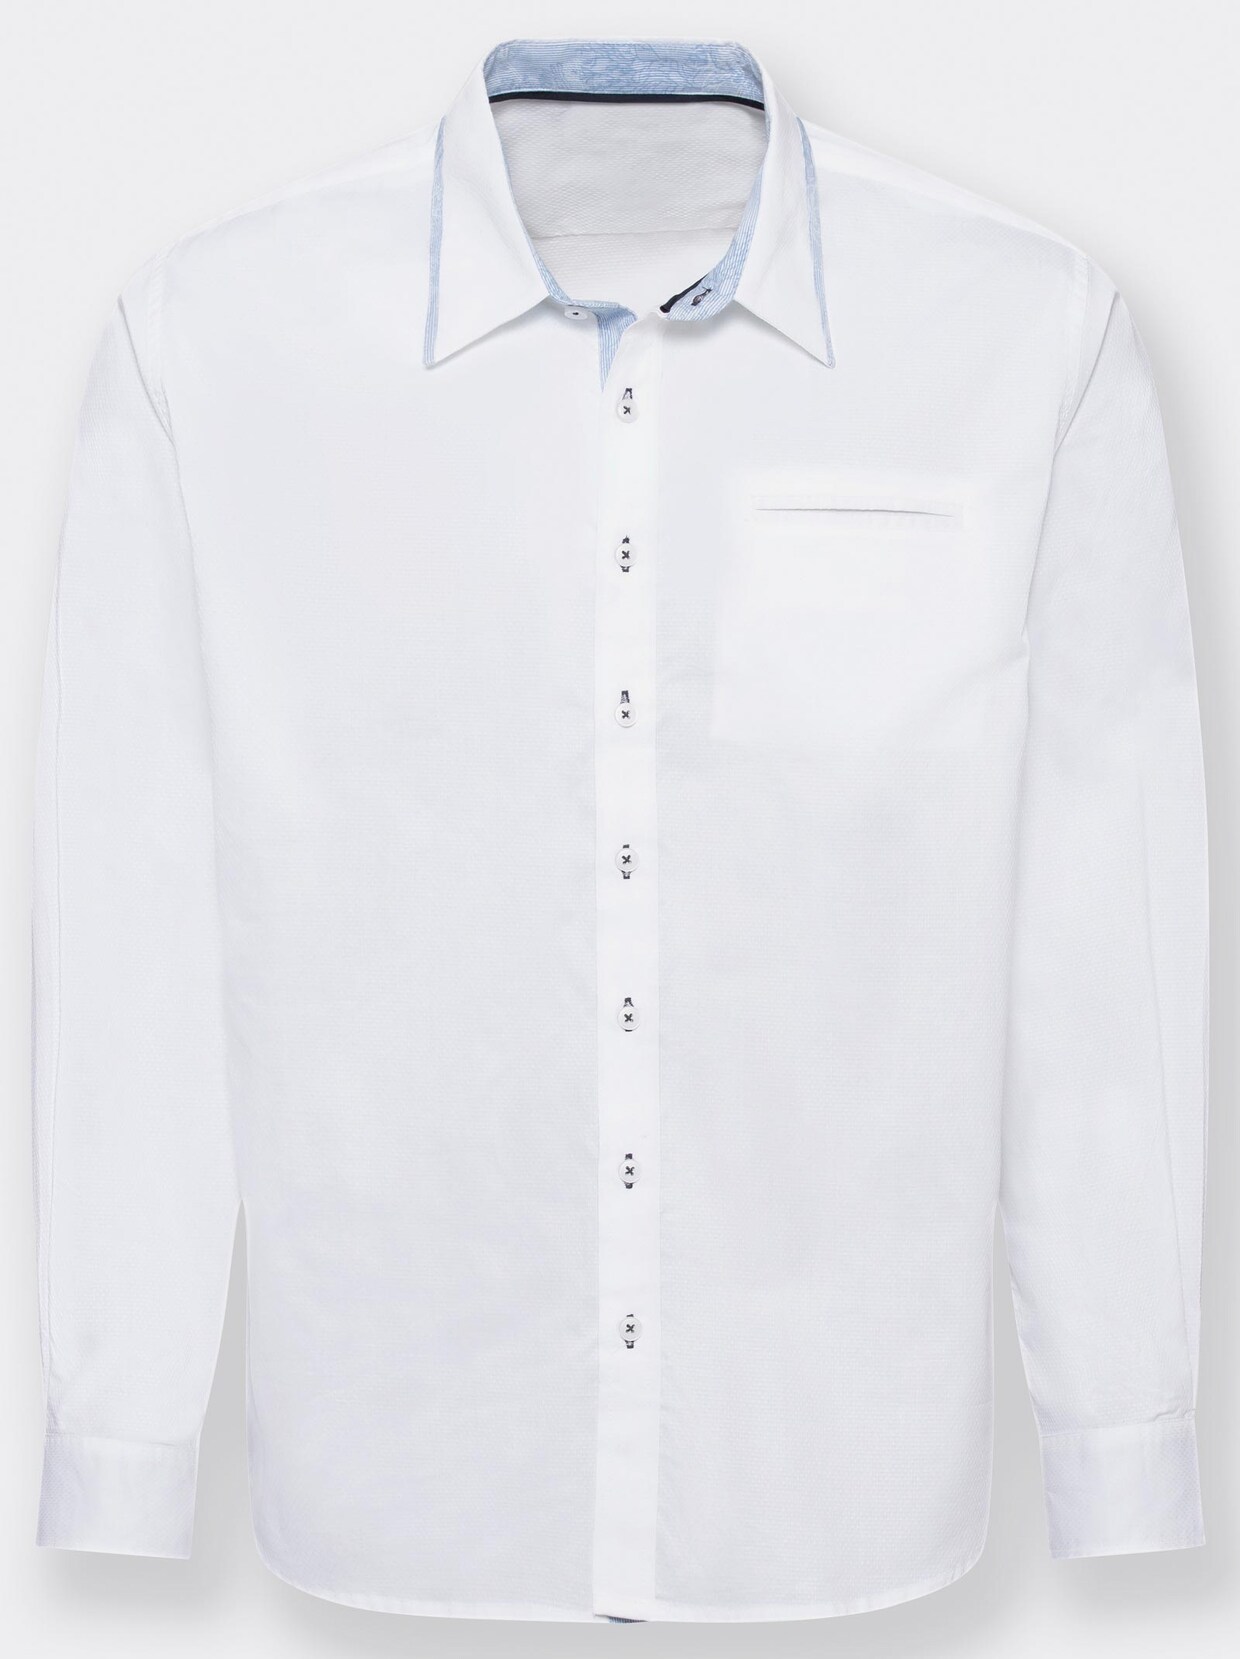 Marco Donati Langarm-Hemd - weiß